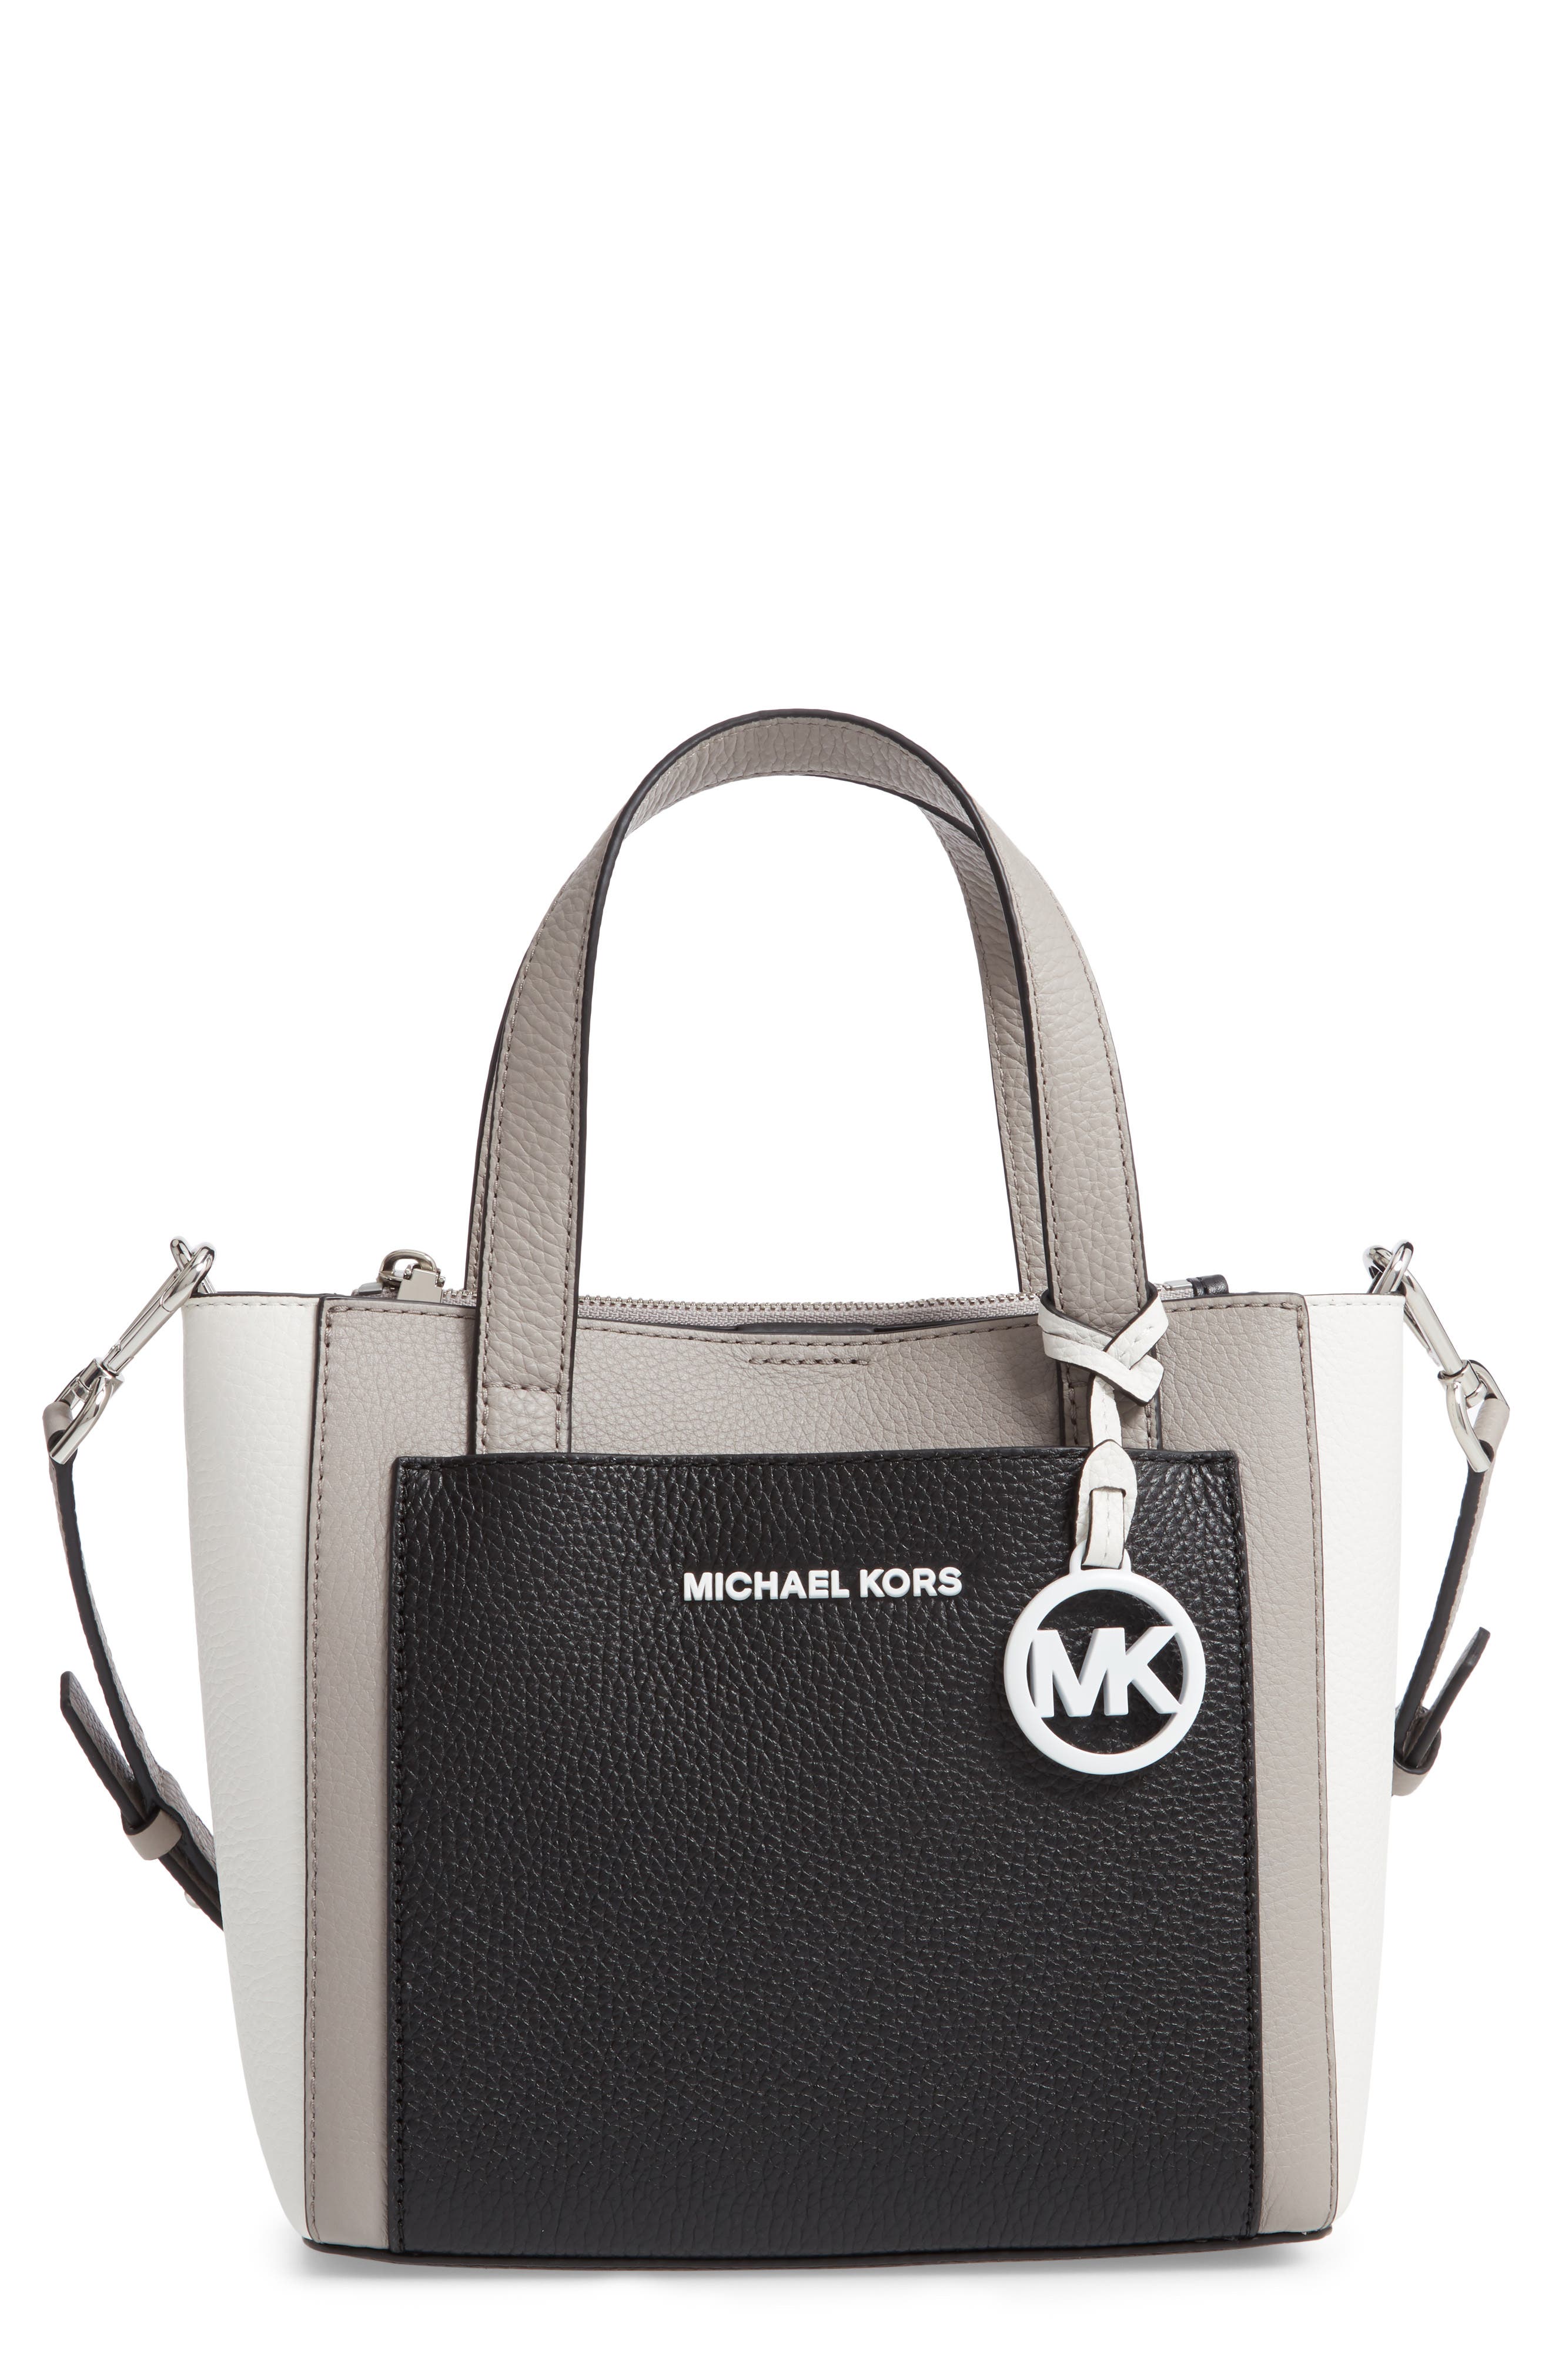 michael kors handbags clearance nordstrom